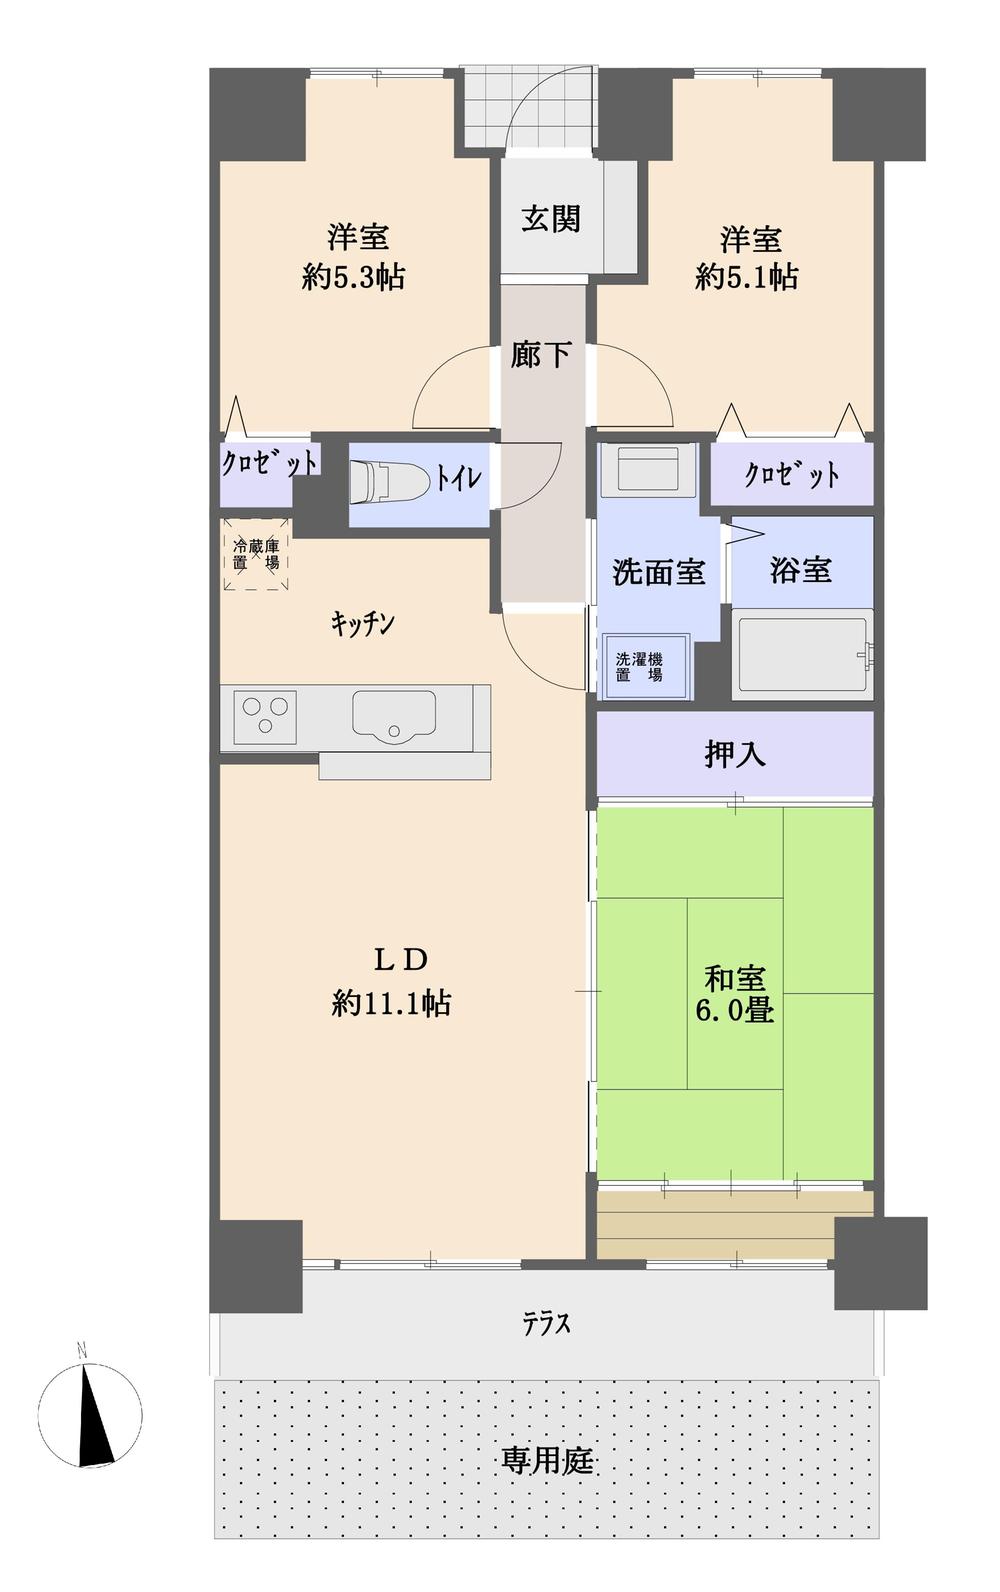 Floor plan. 3LDK, Price 9.3 million yen, Occupied area 70.28 sq m